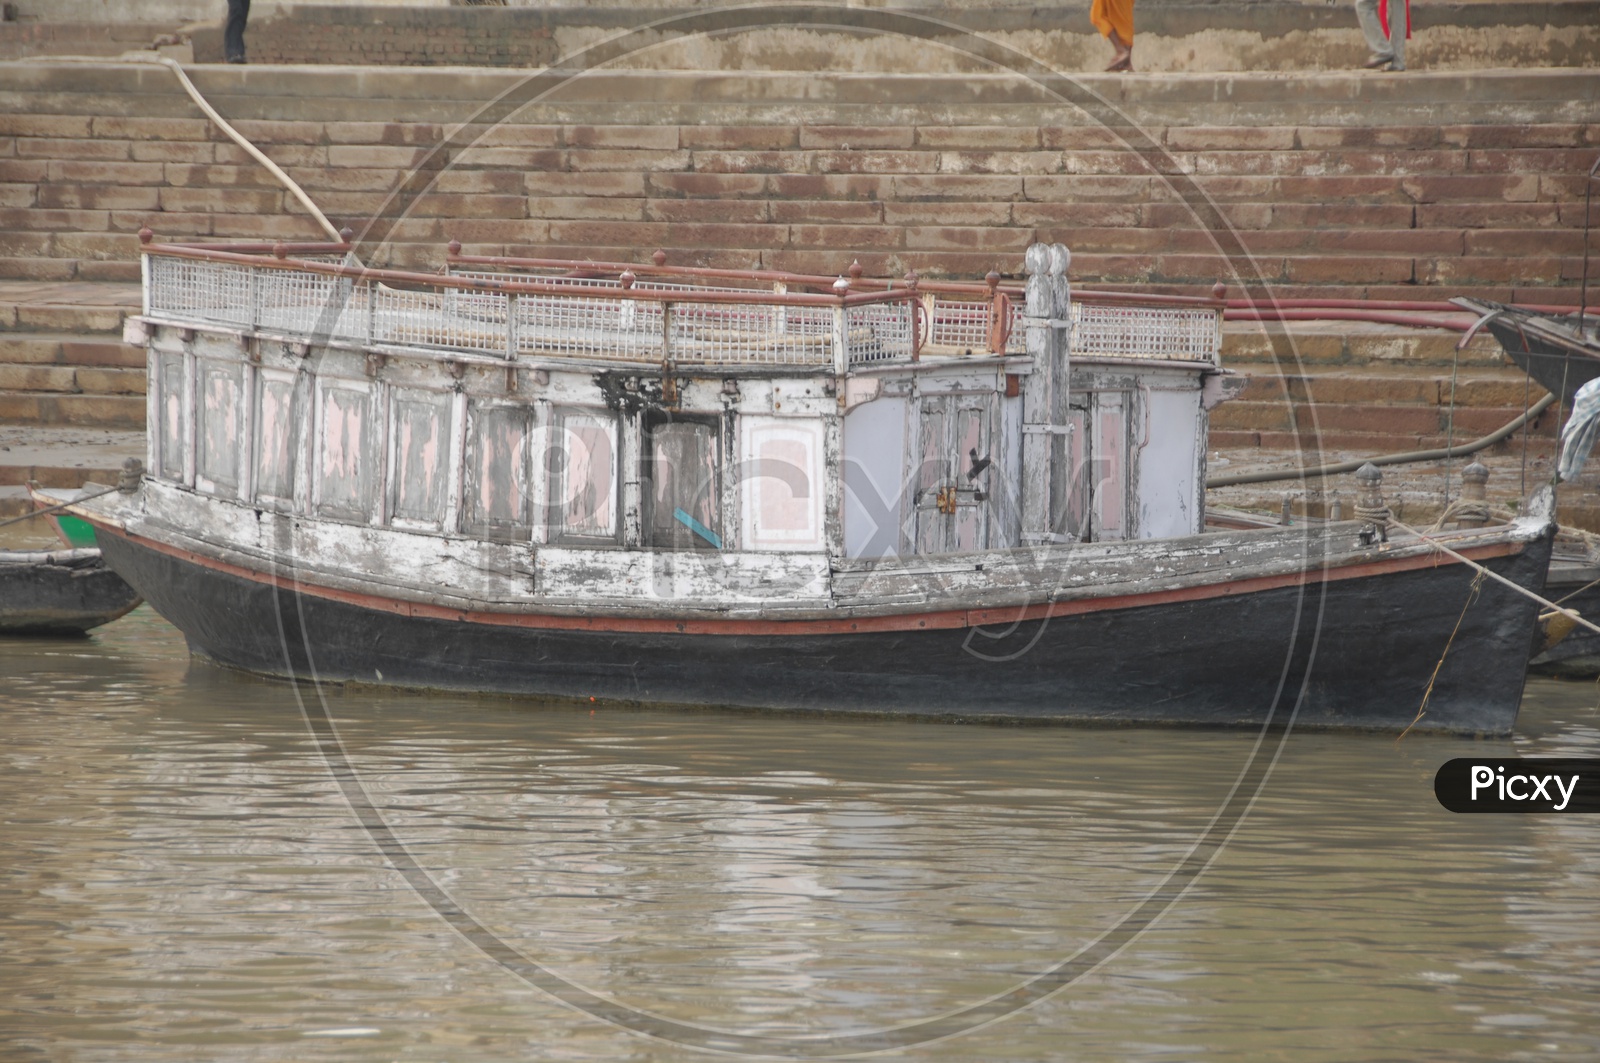 Boat in Ganga River, Varanasi